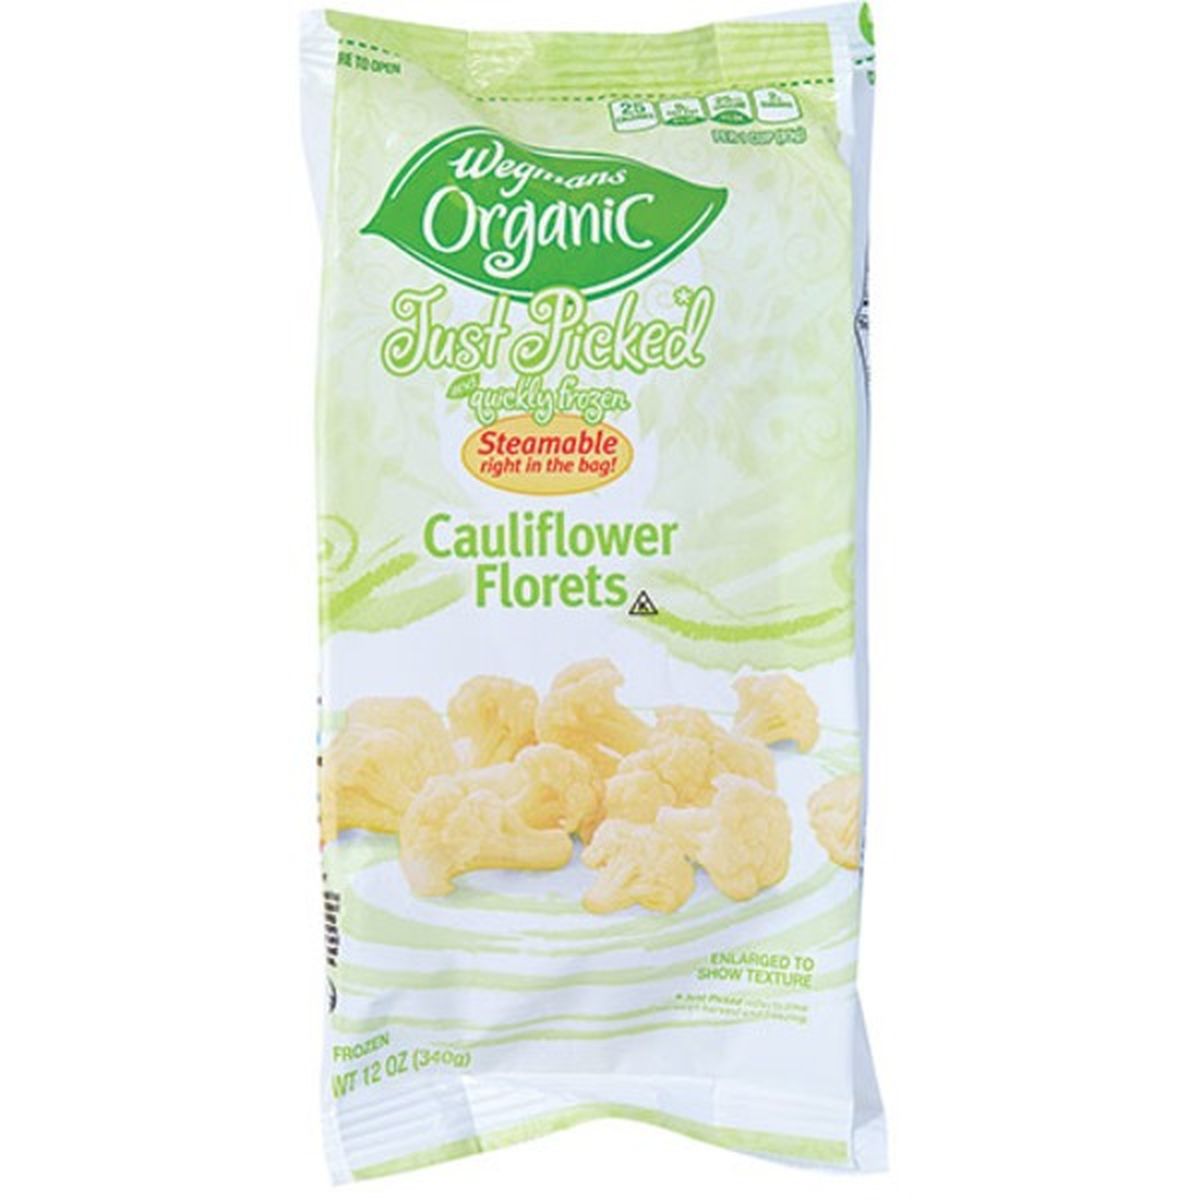 Calories in Wegmans Organic Frozen Cauliflower Florets